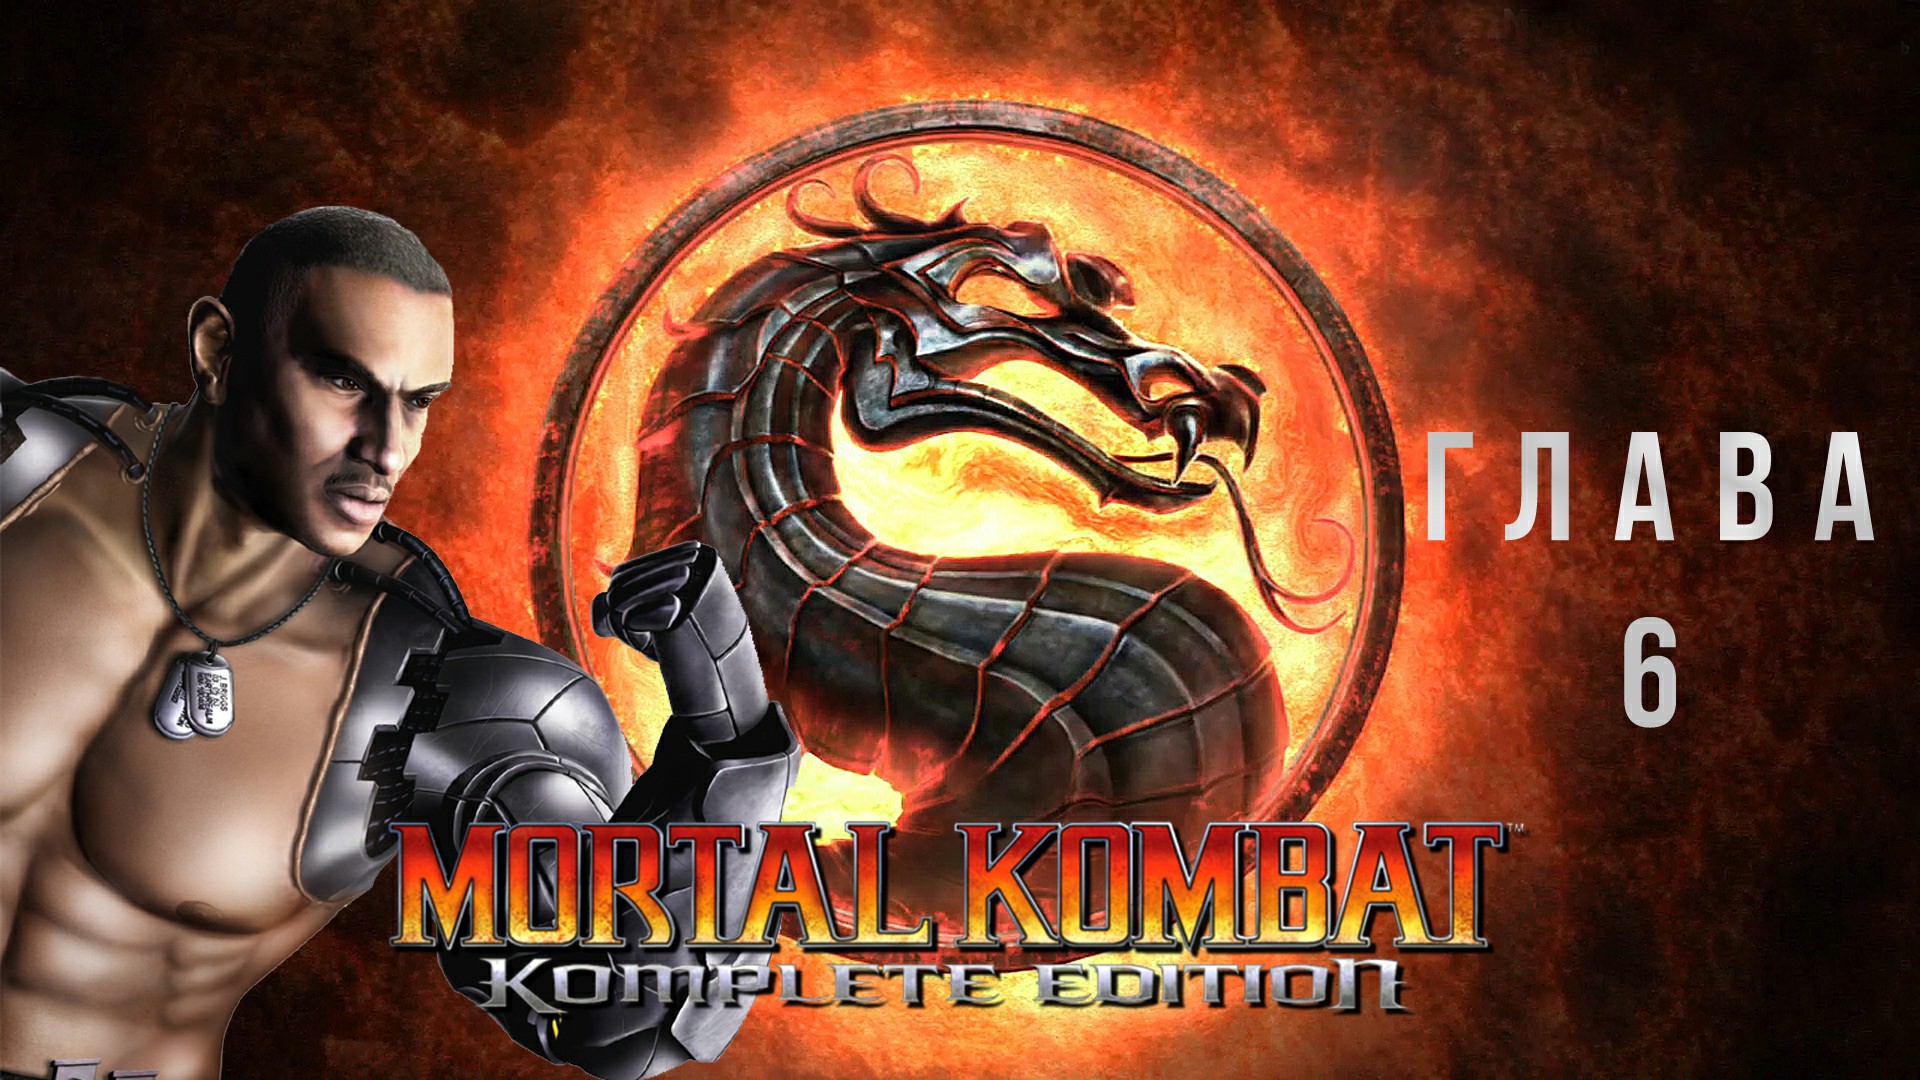 Mortal Kombat Komplete Edition Глава 6 - Jax без комментариев